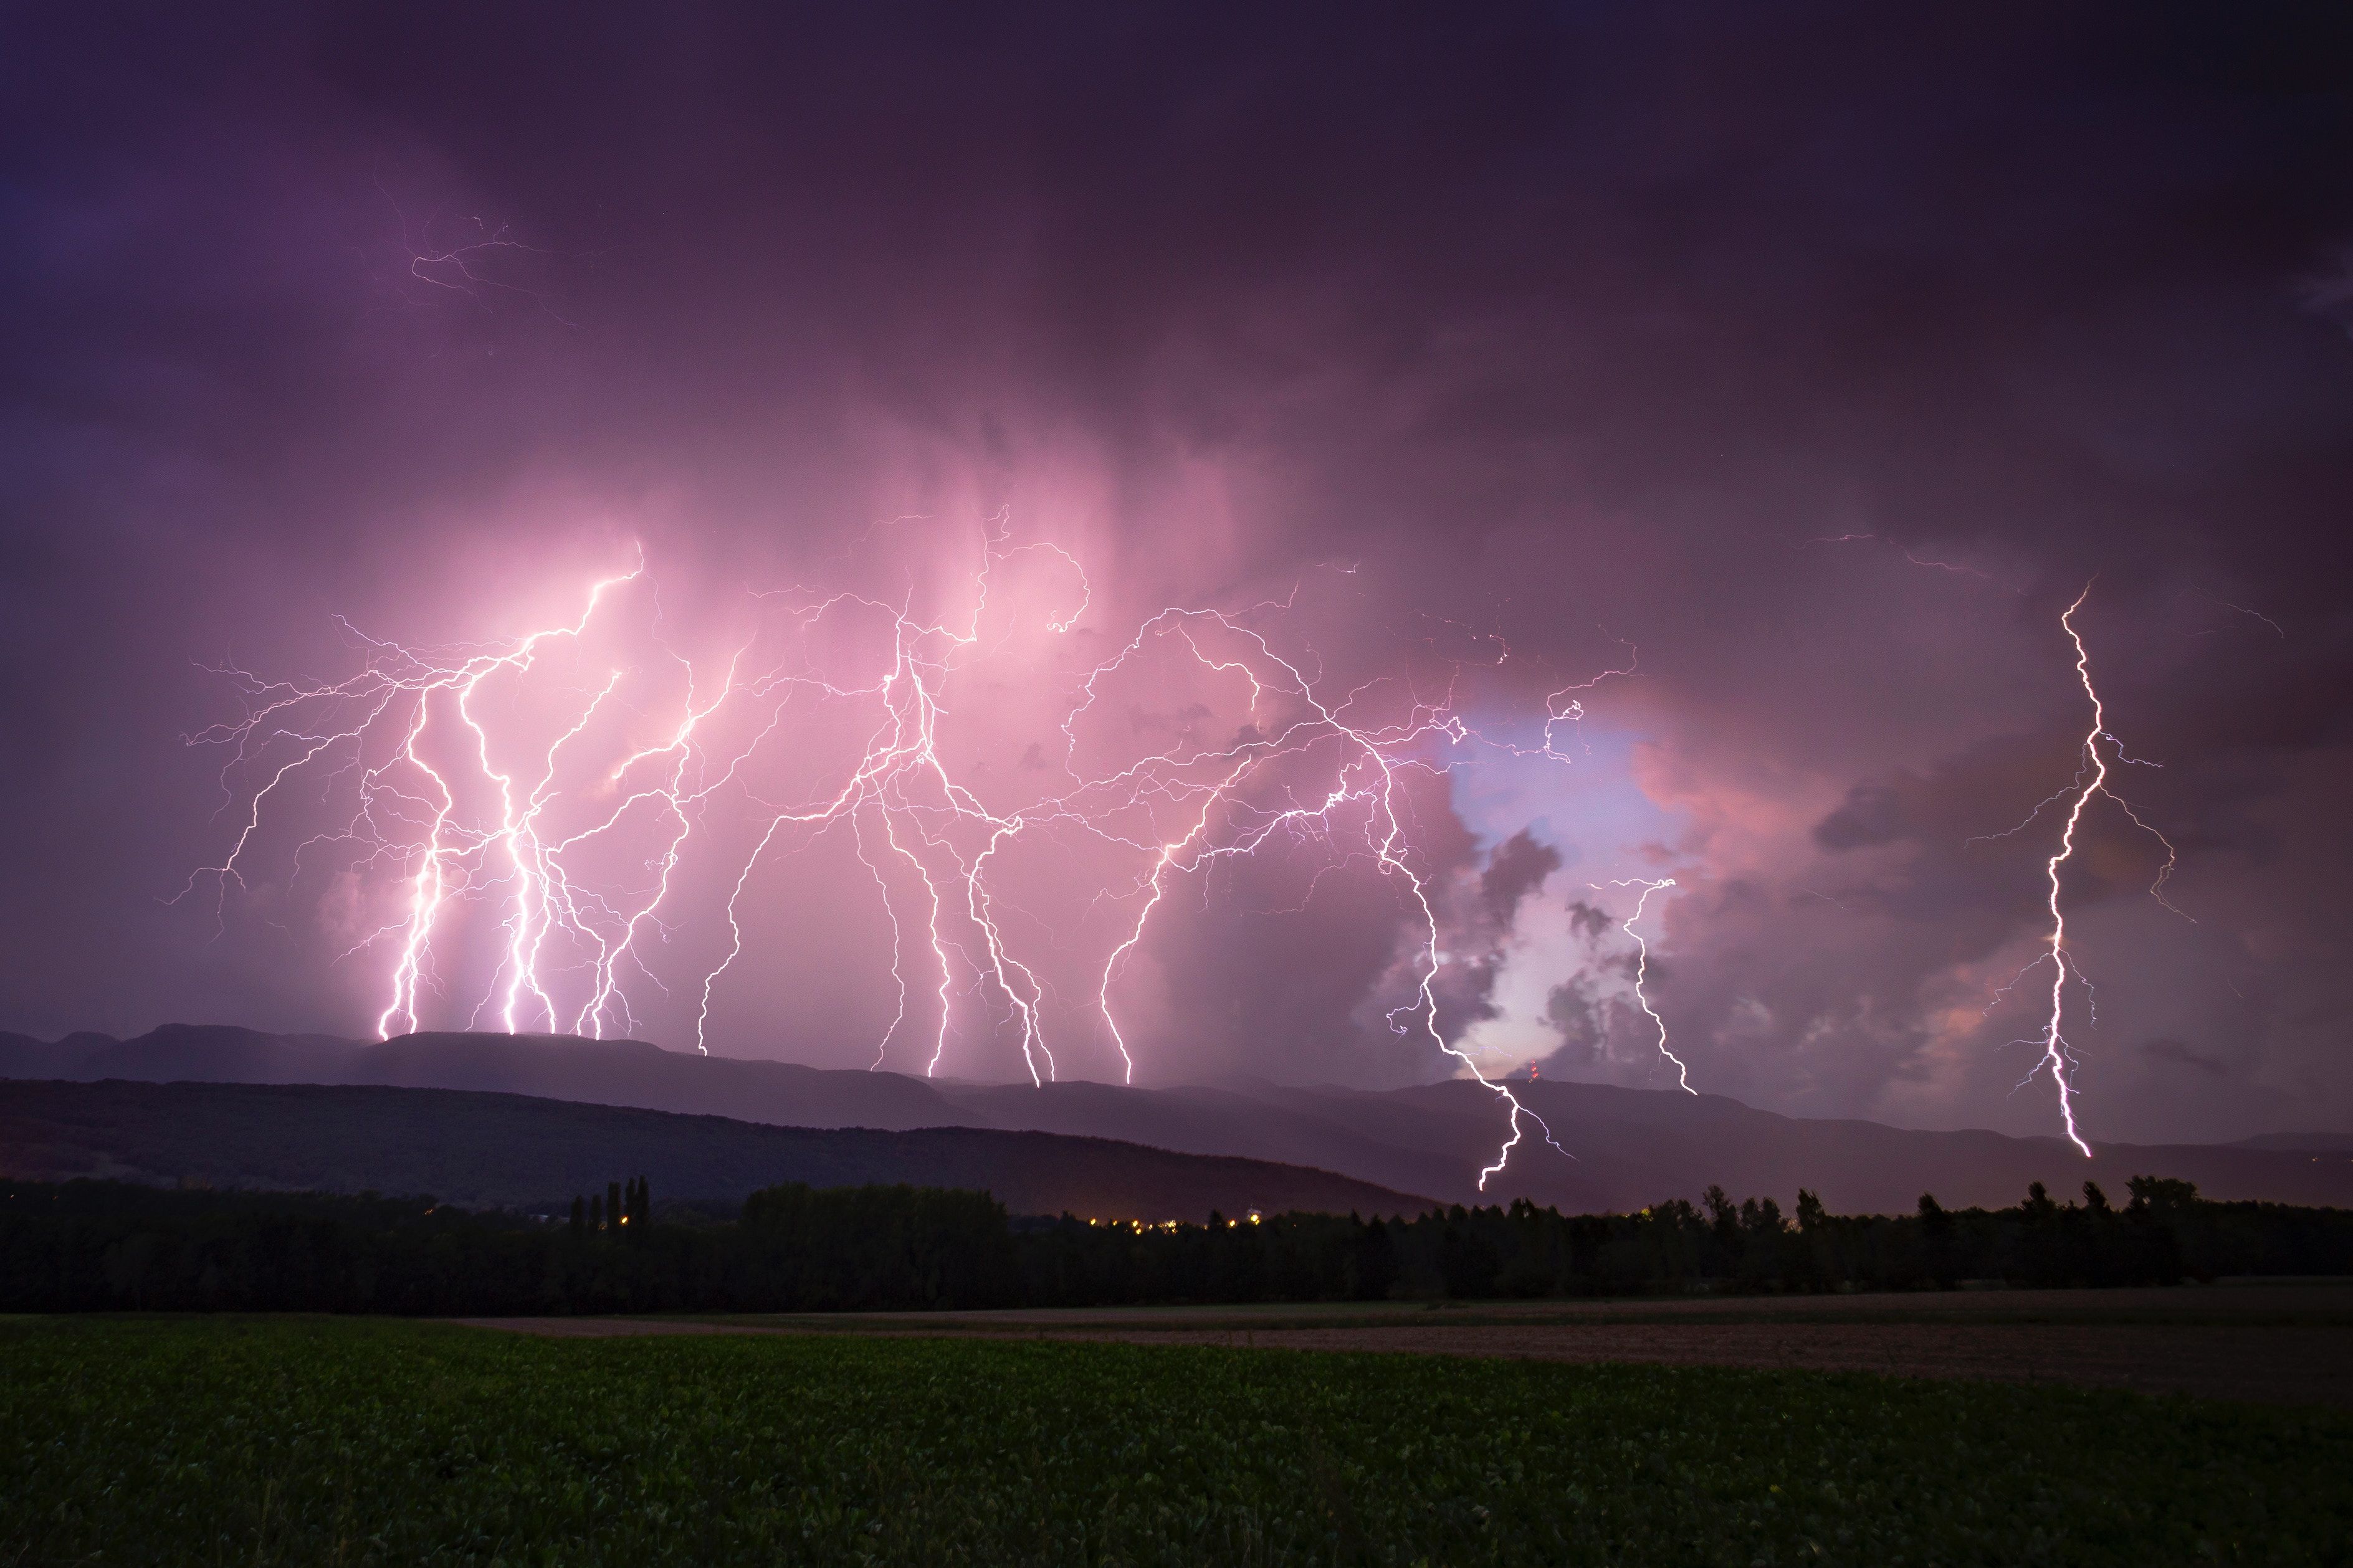 3776x2517 #electric, #nature, #nyon, #landscape, #foudre, #mountain, #switzerland, #rain, #storm, #electricity, #weather, #meteo, #thunder, #thunderstorm, #pluie, #strike, #montagne, #summer, #Creative Commons image, #lightning, #thunderstorm